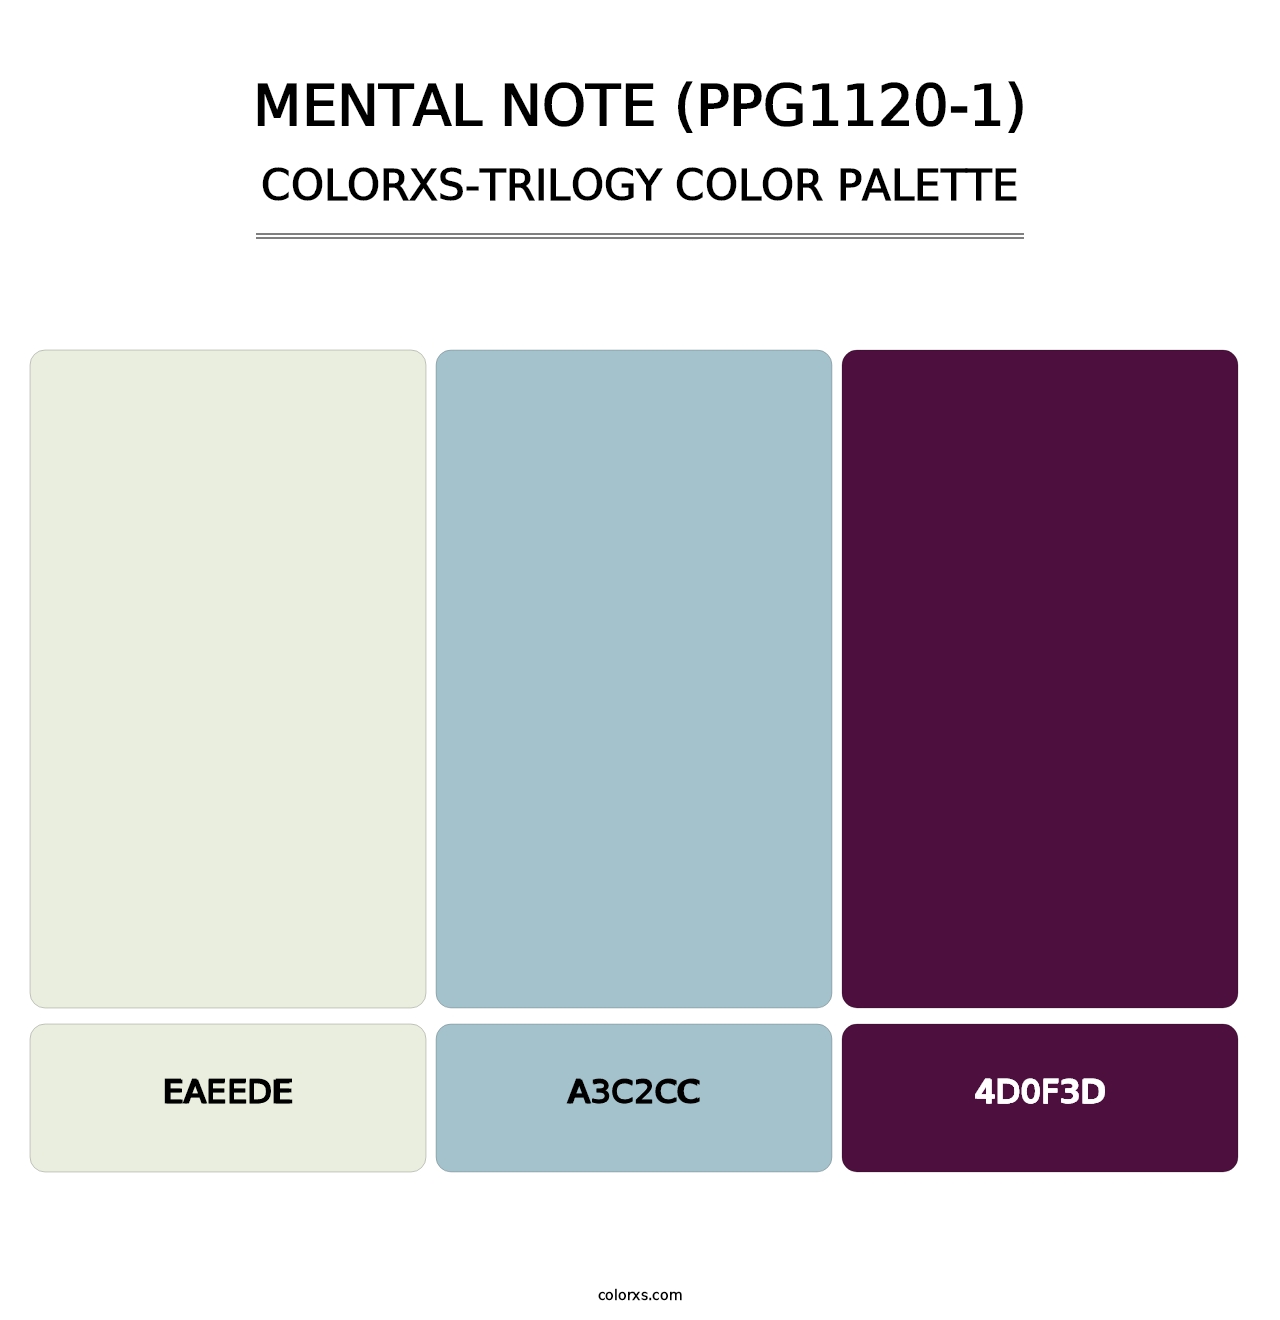 Mental Note (PPG1120-1) - Colorxs Trilogy Palette